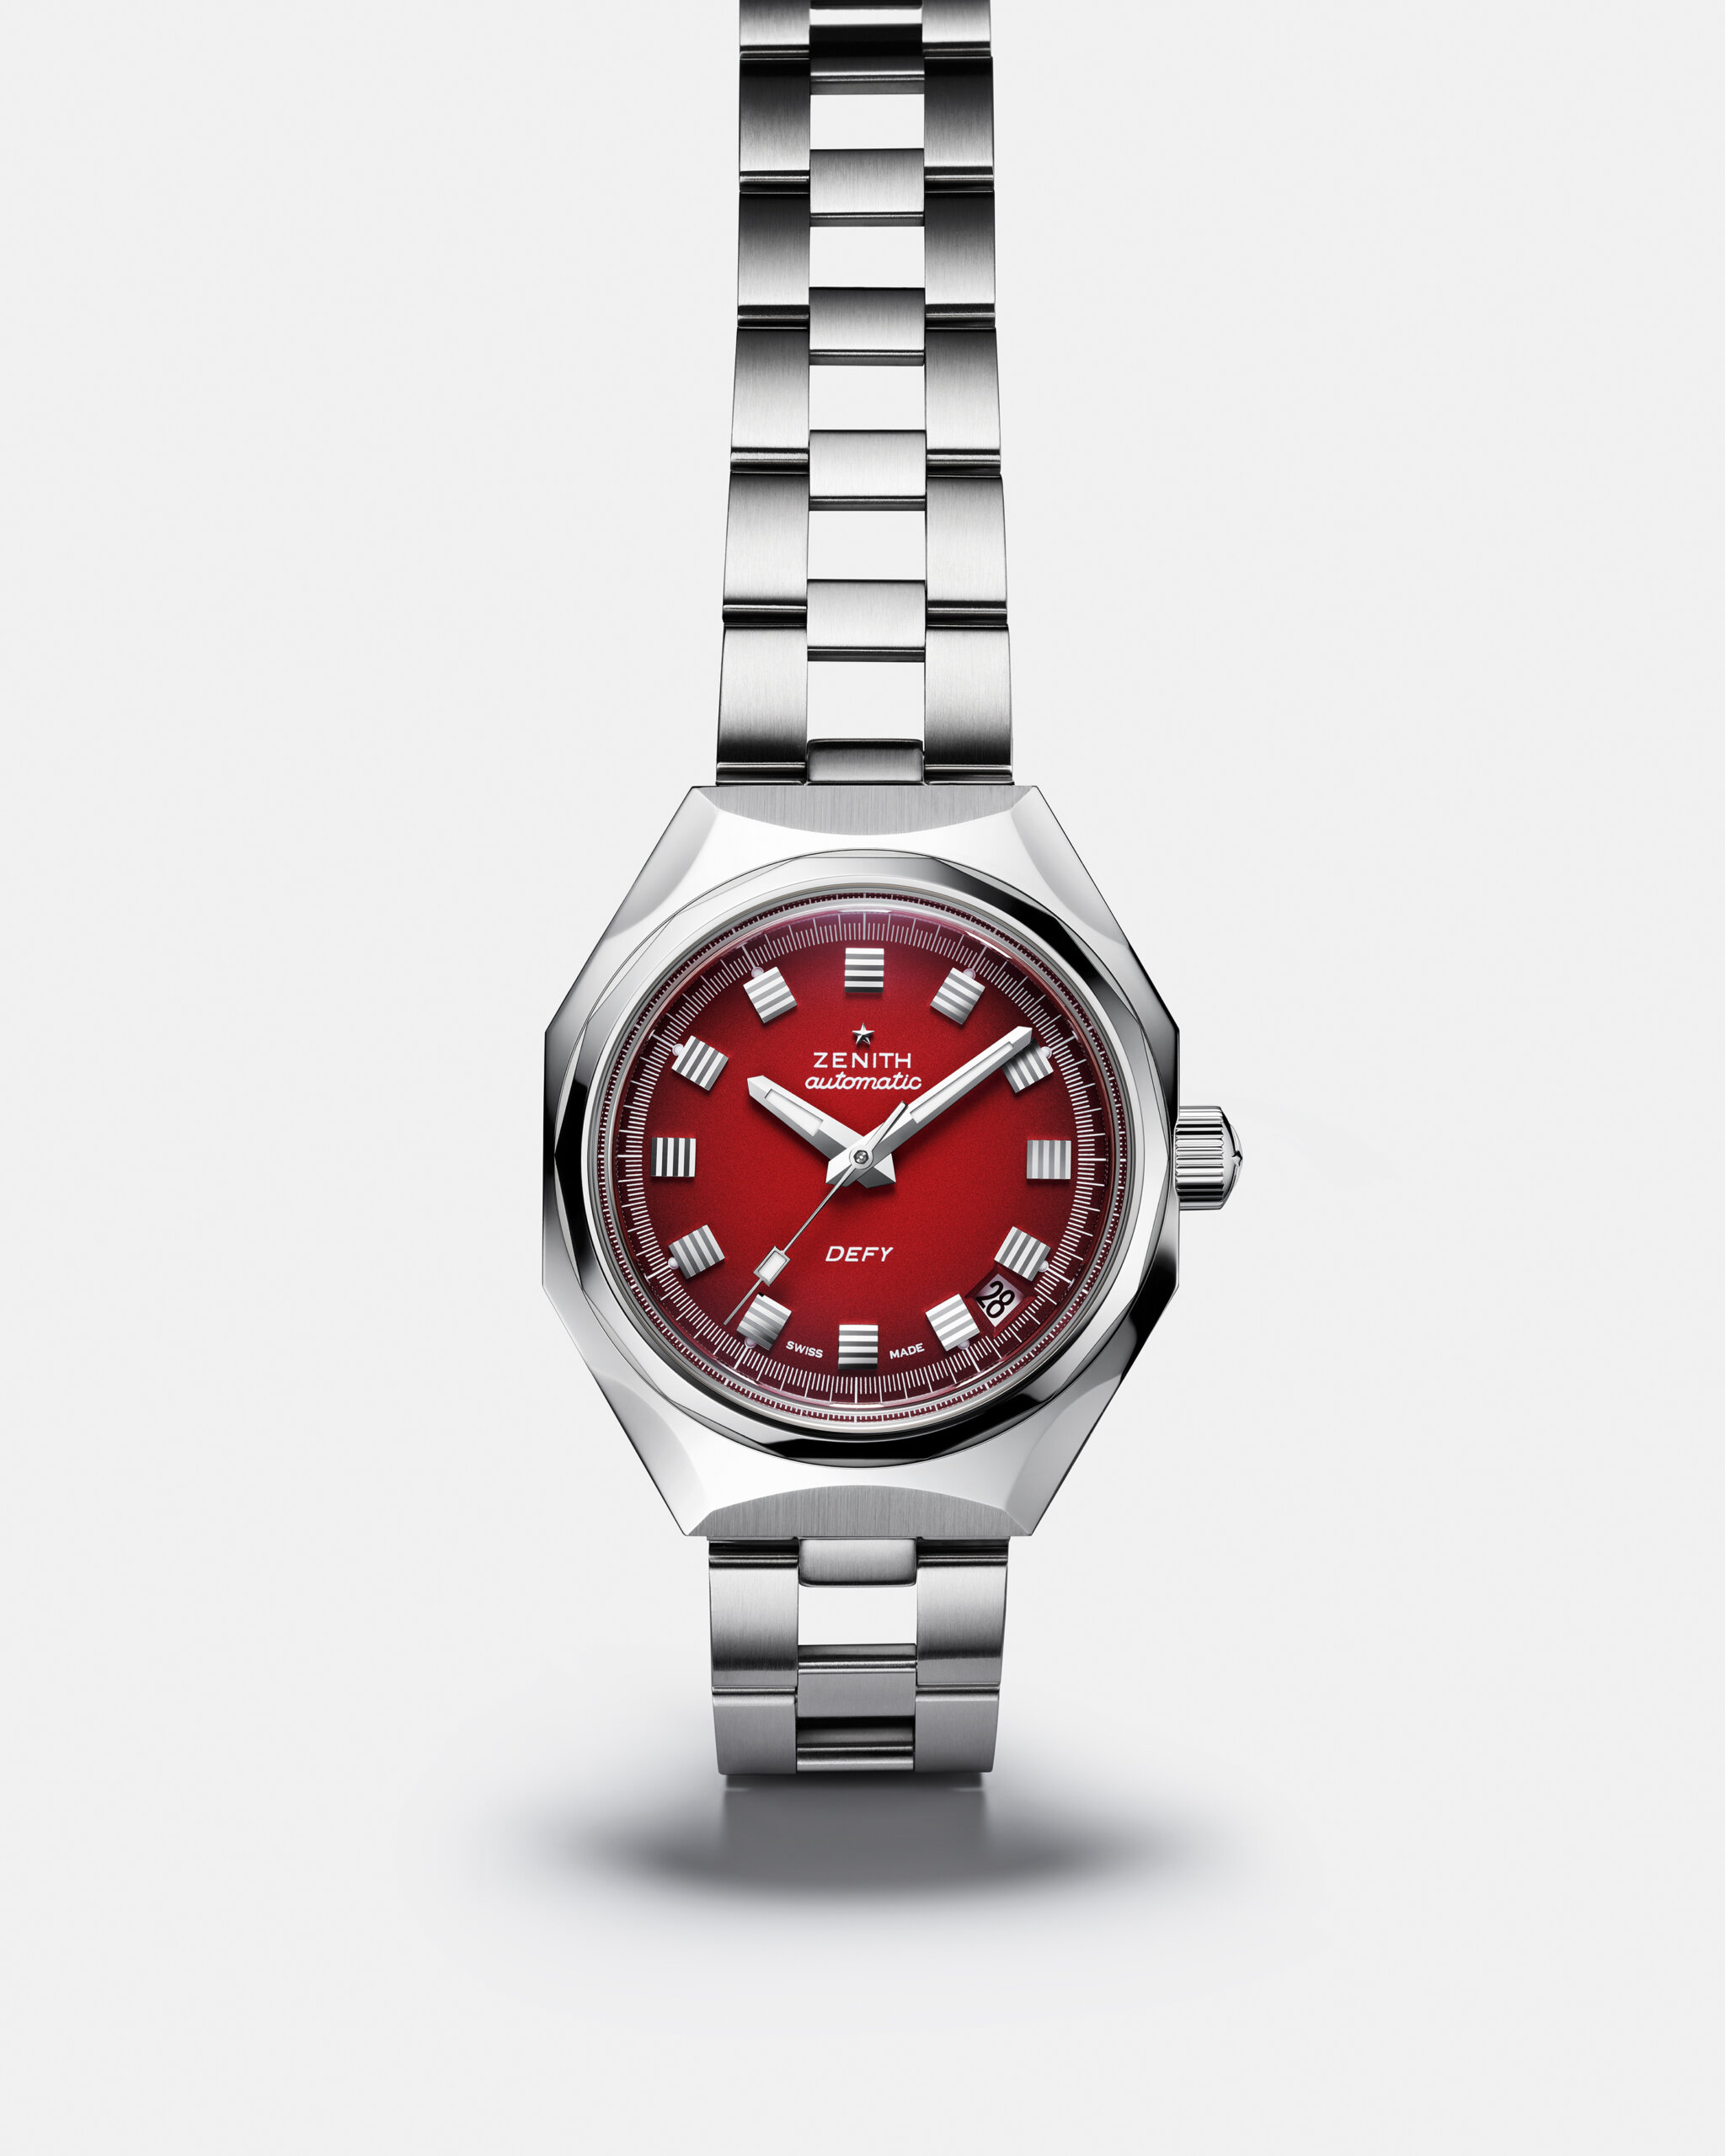 ZENITH - Swiss Luxury Watches & Manufacture since 1865 - ZENITH